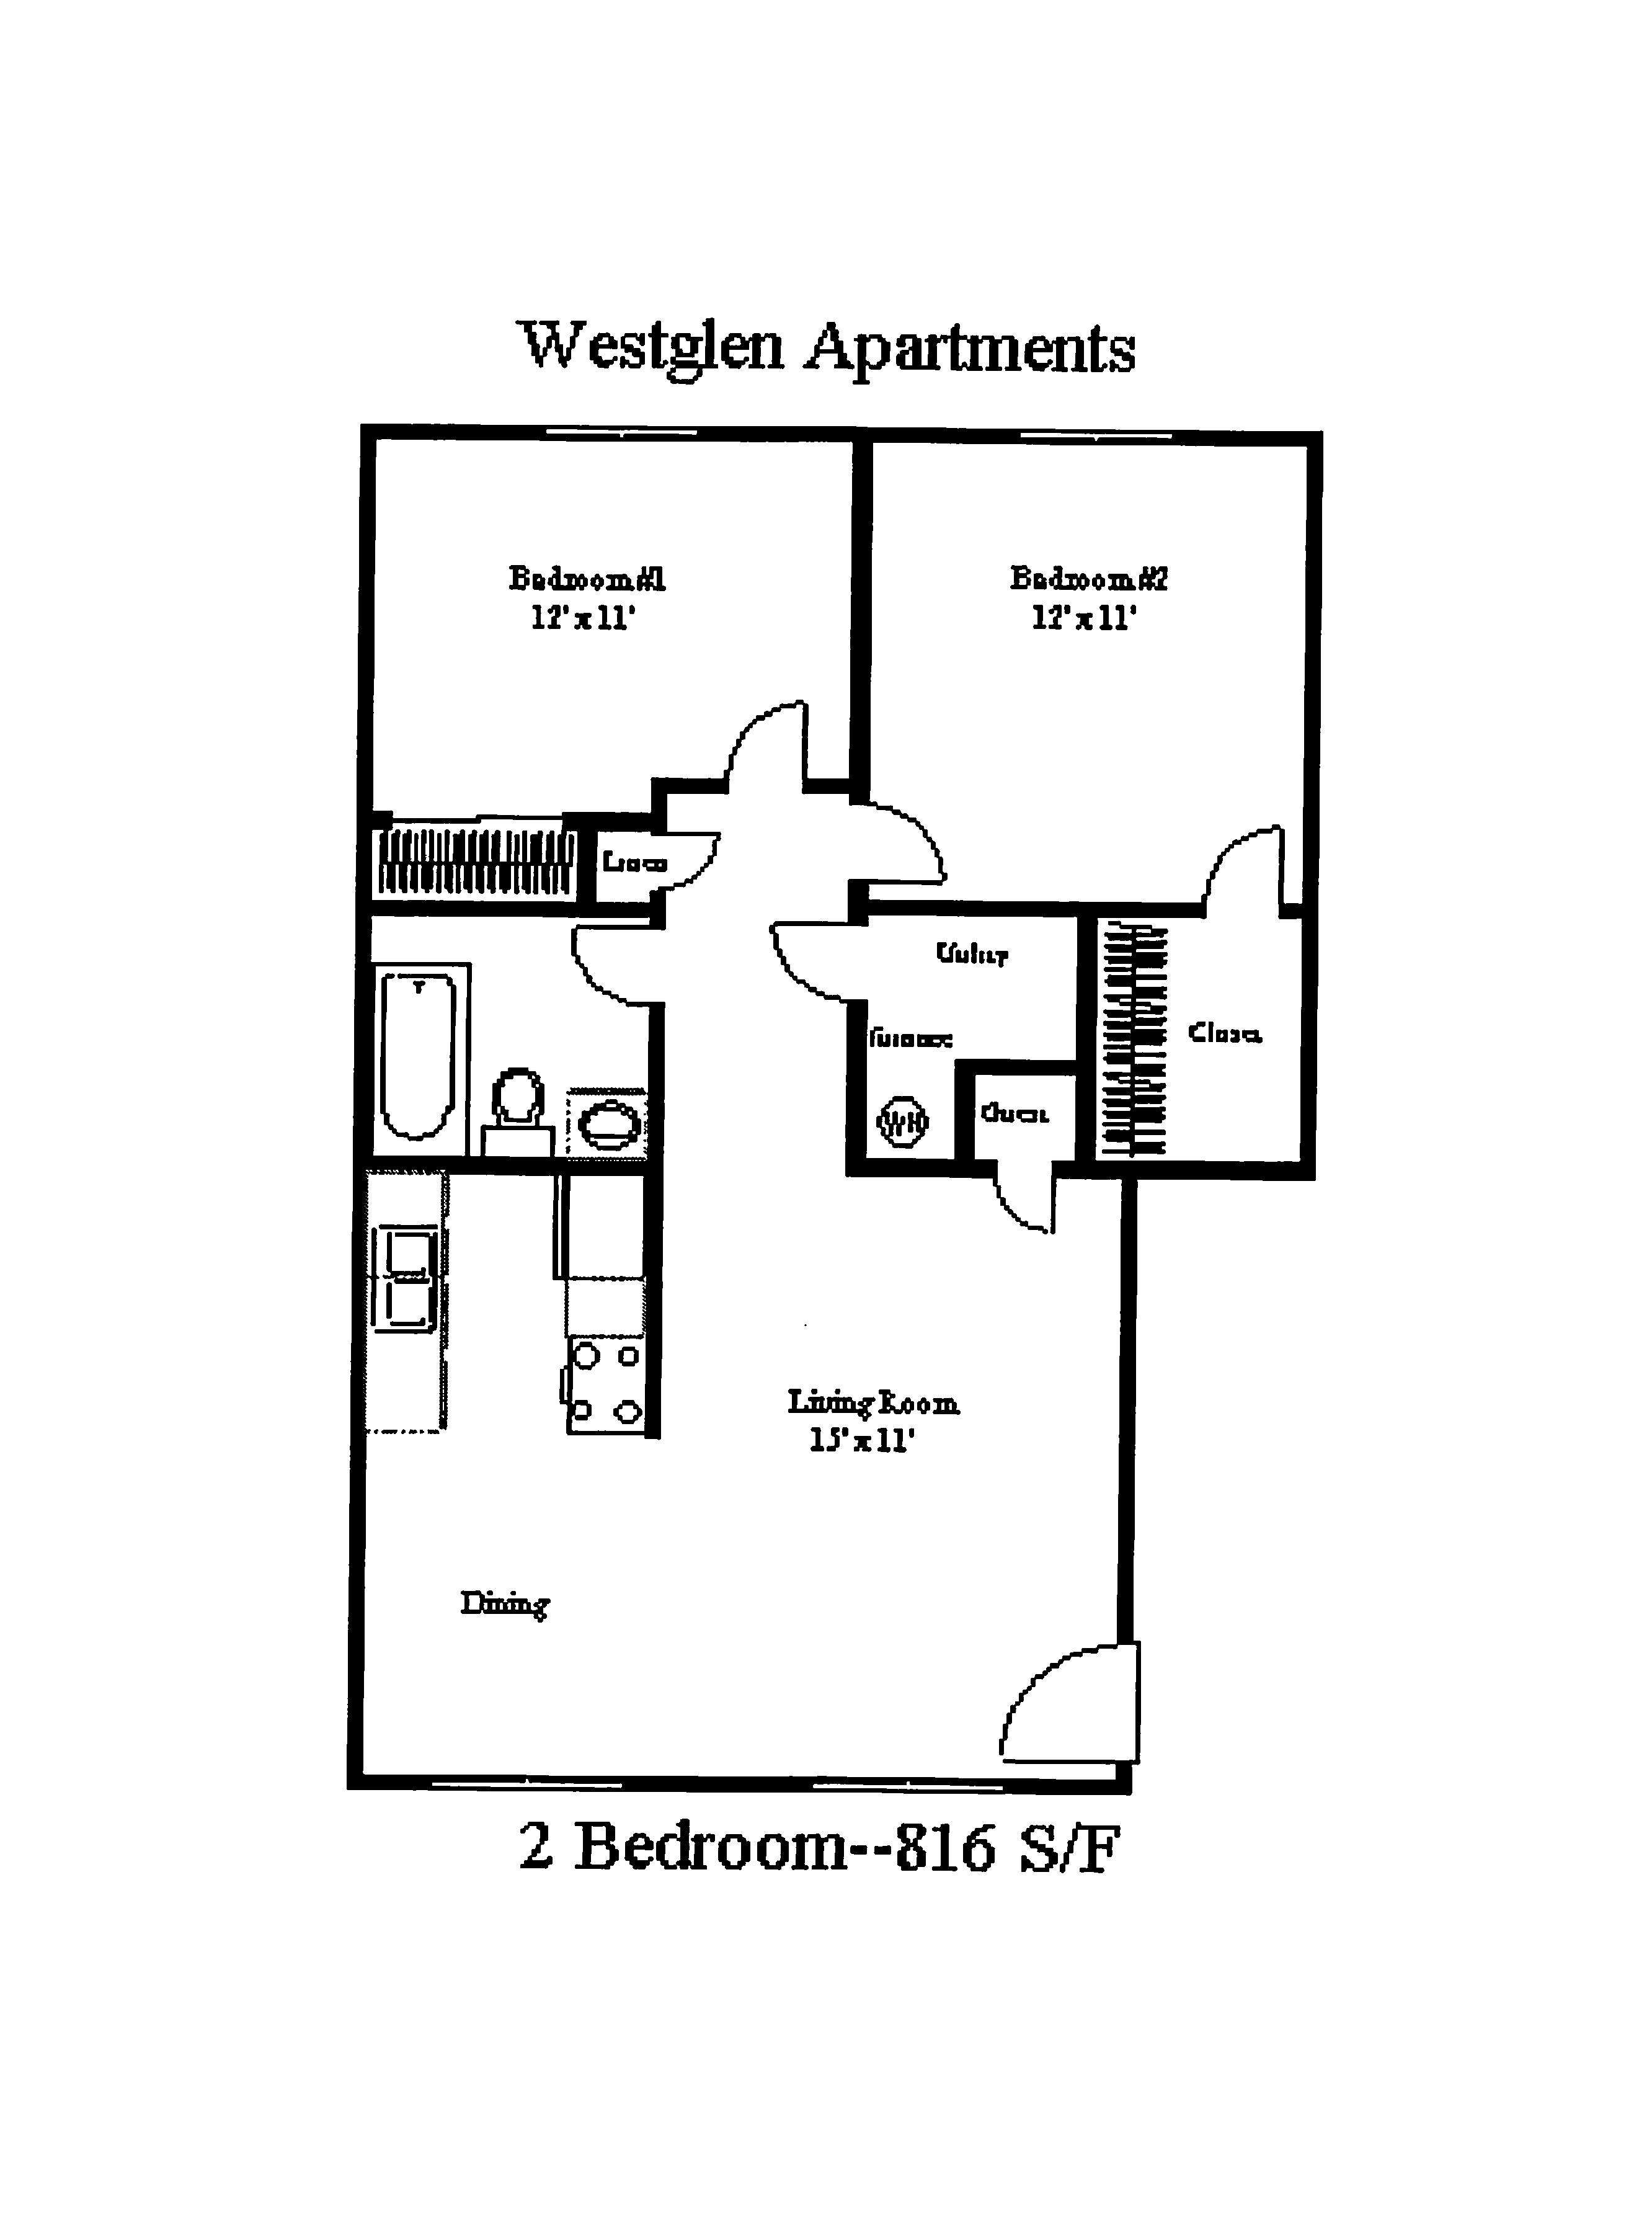 West Glen Apartments - 2 BR